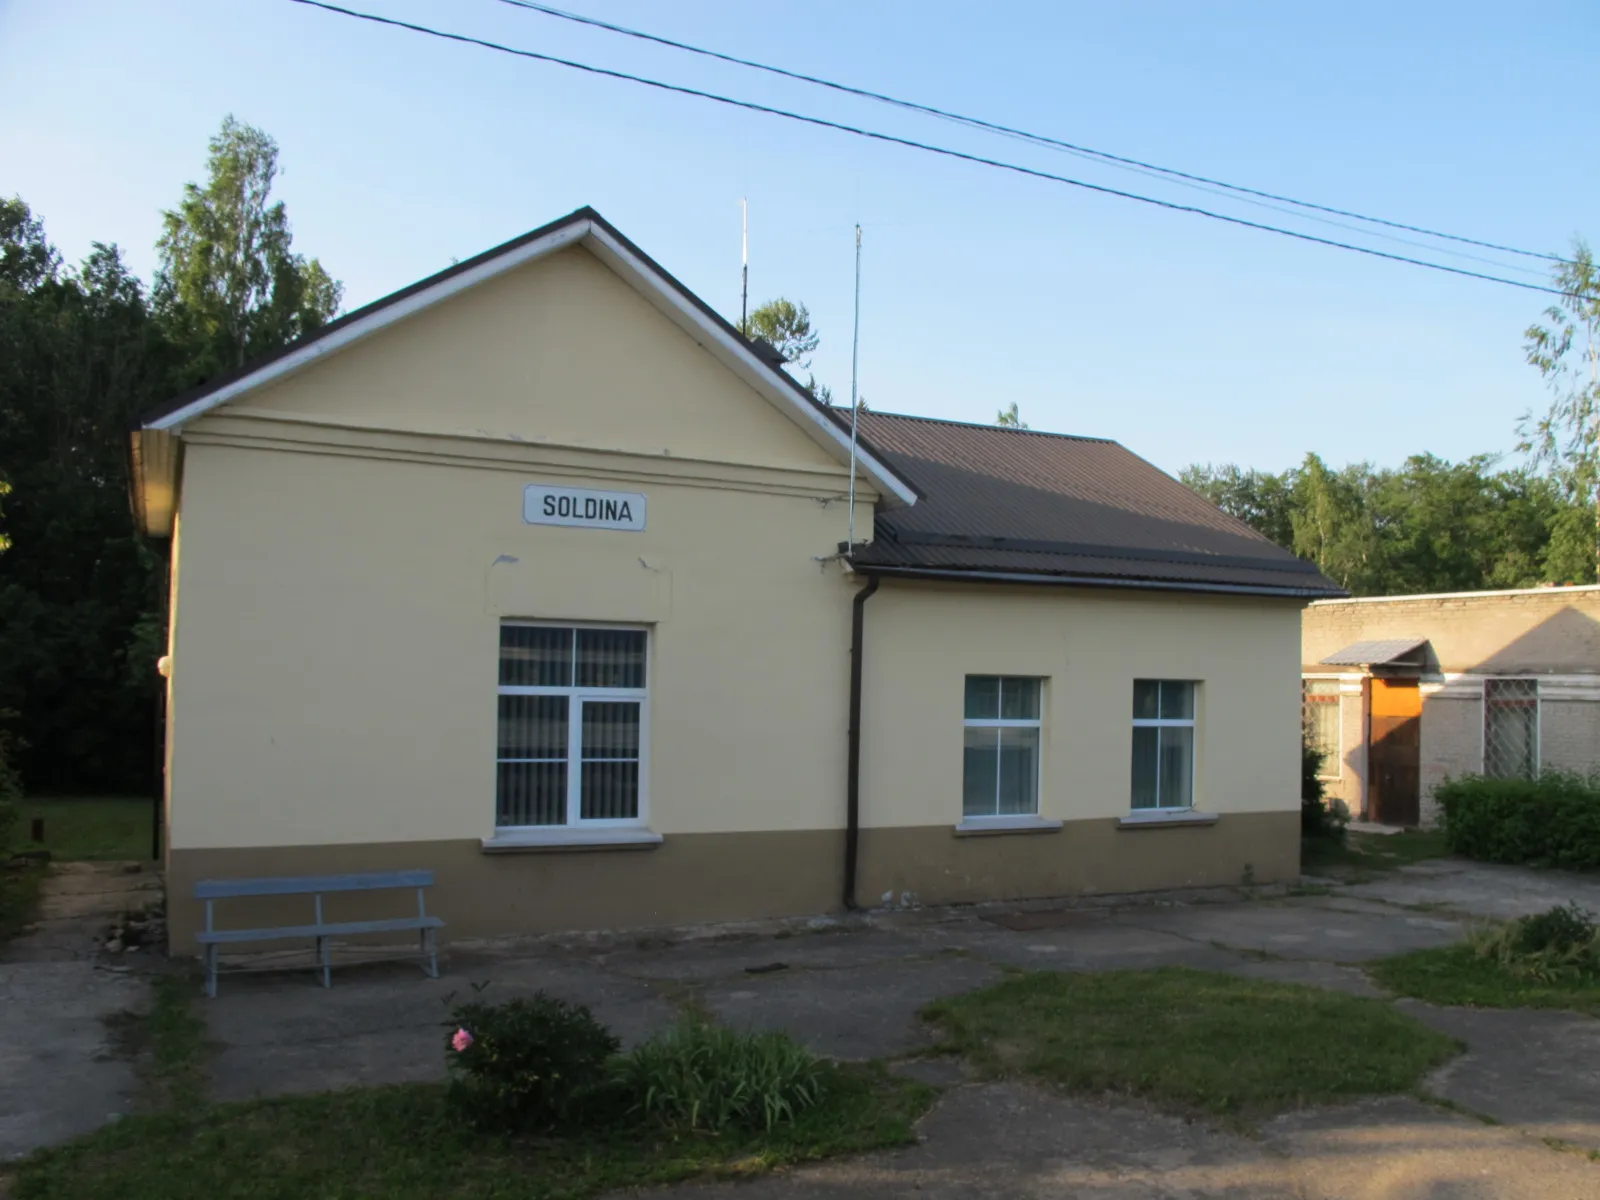 Photo showing: Railway station in Soldina, Estonia